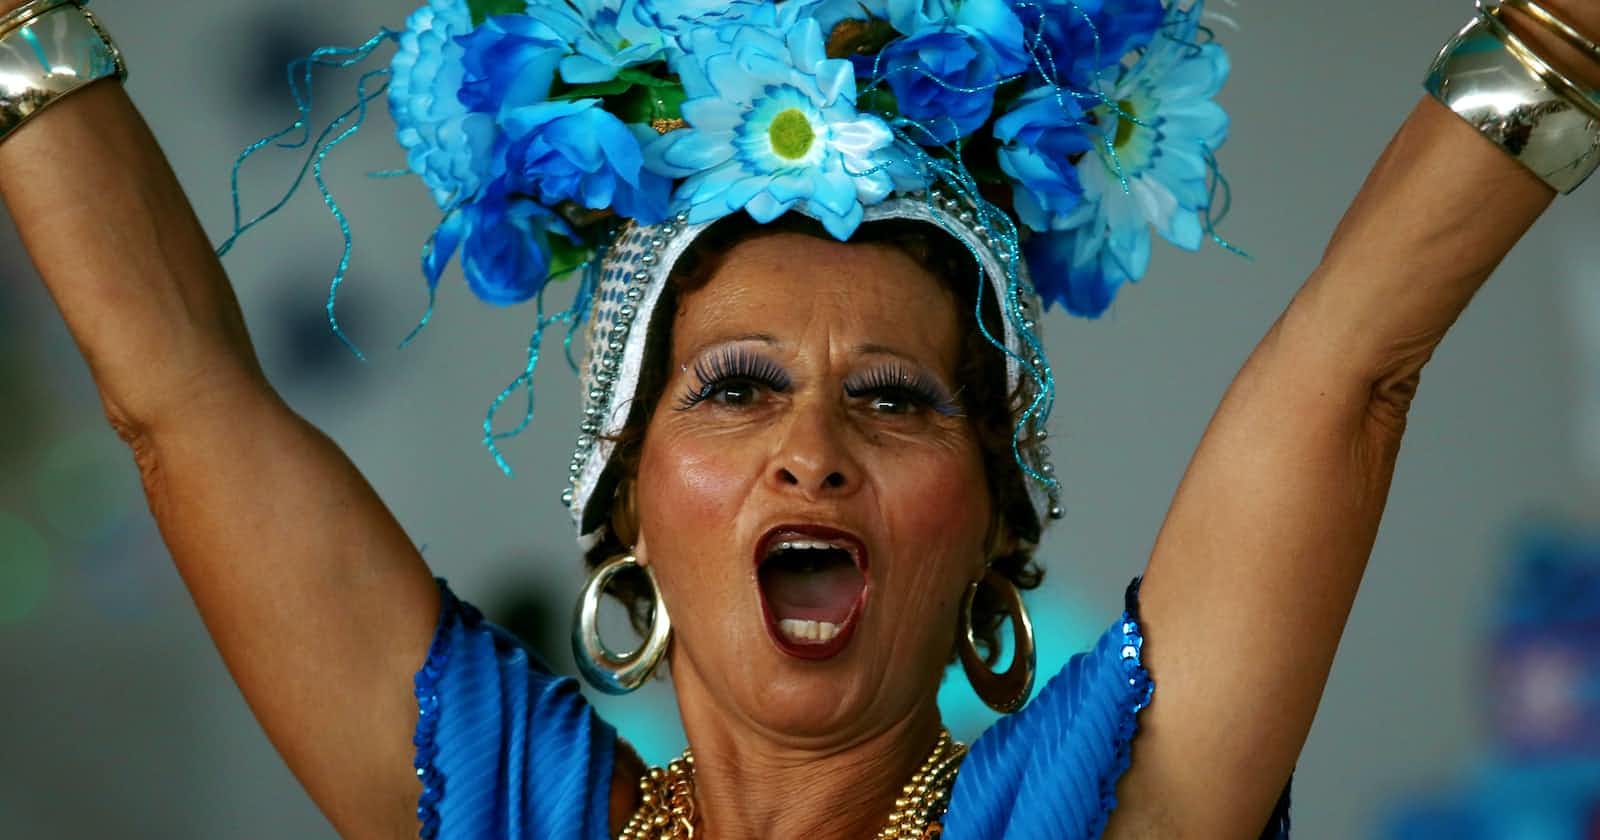 C: Brazil's Spectacular Carnaval Celebration